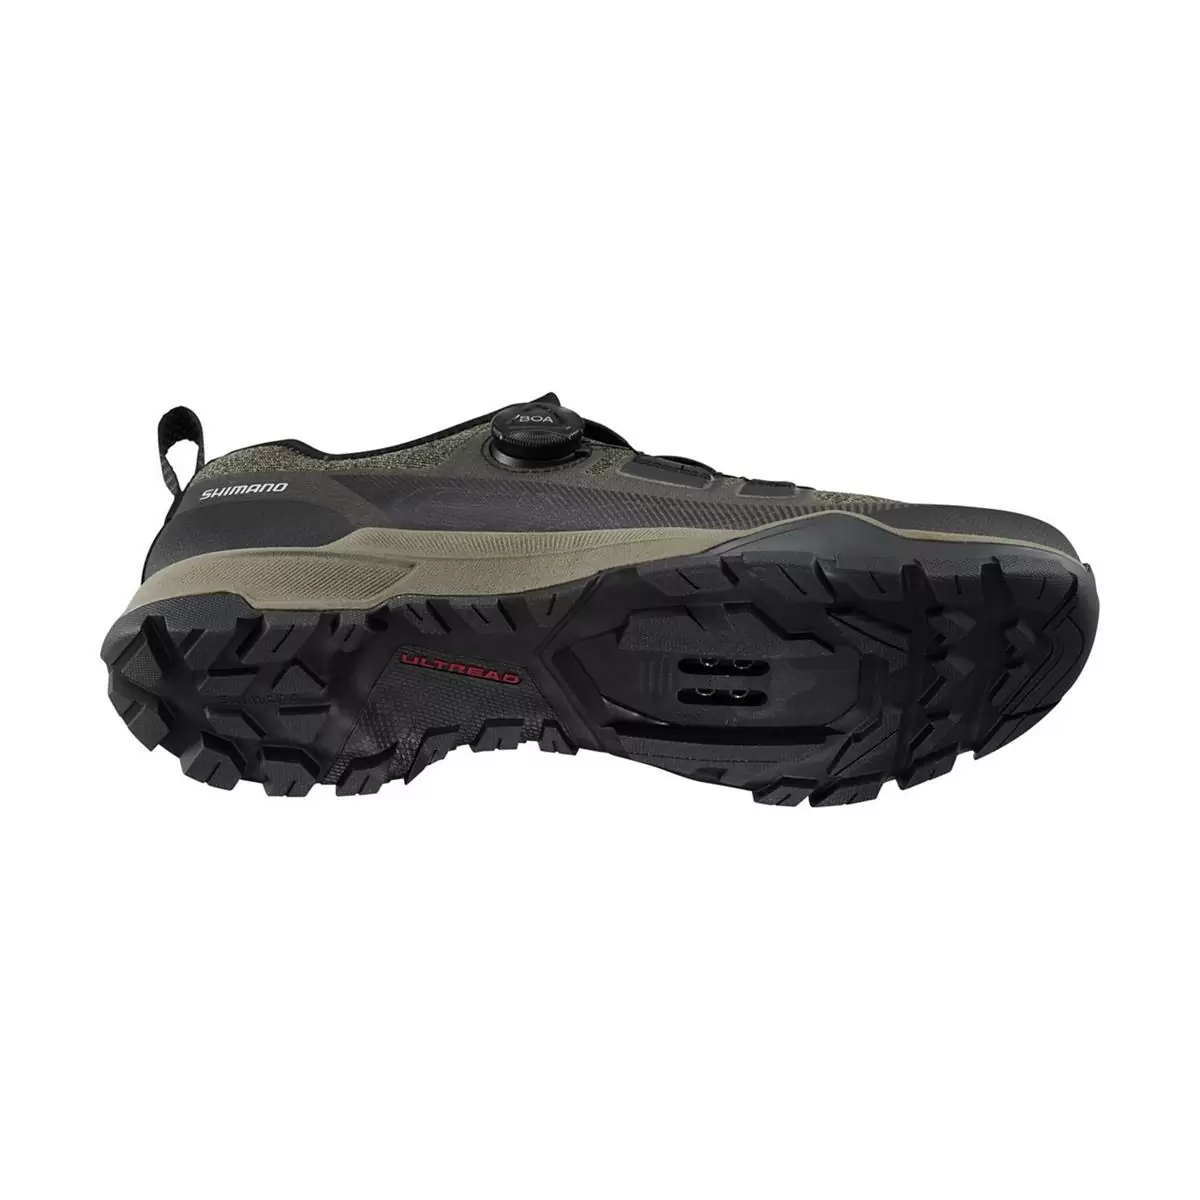 Trekking / MTB Shoes SH-EX700 Green Size 46 #2